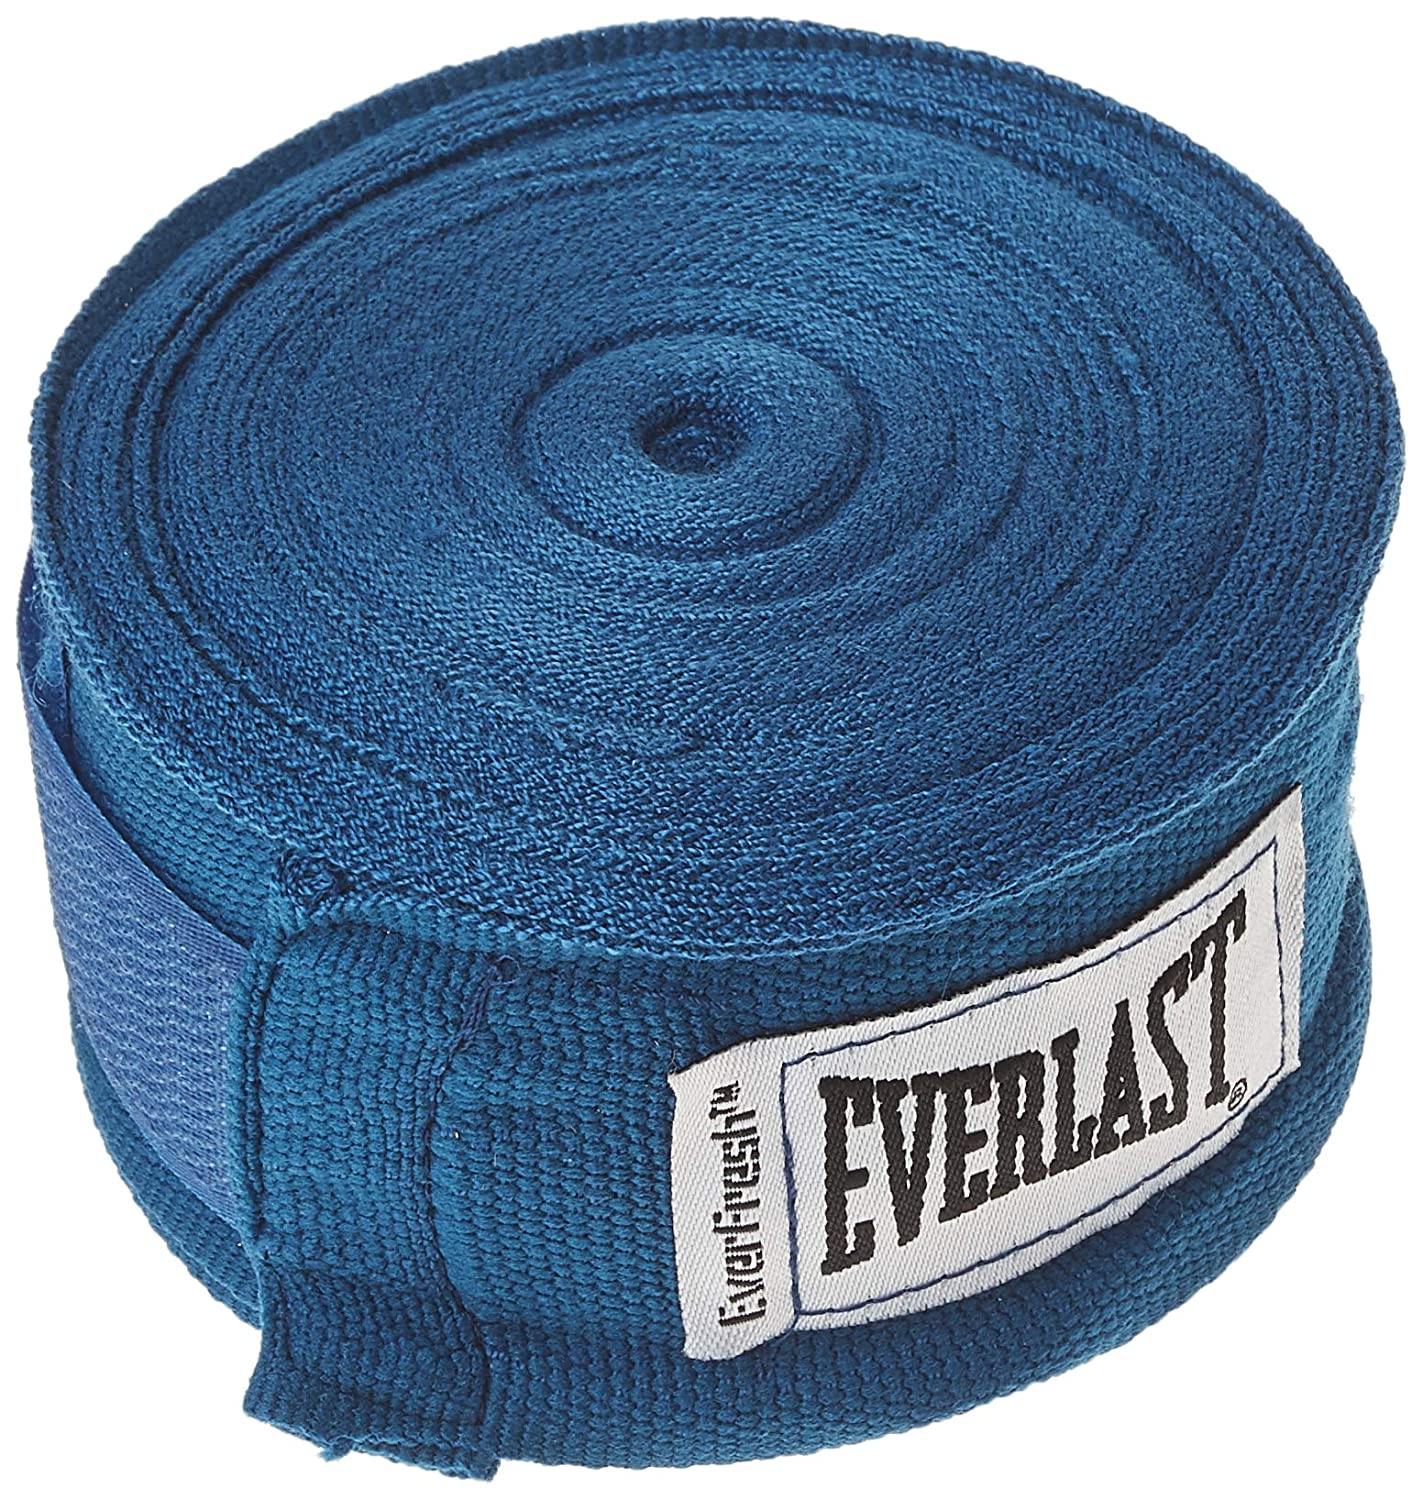 Everlast Boxing Hand Wraps - Best Price online Prokicksports.com